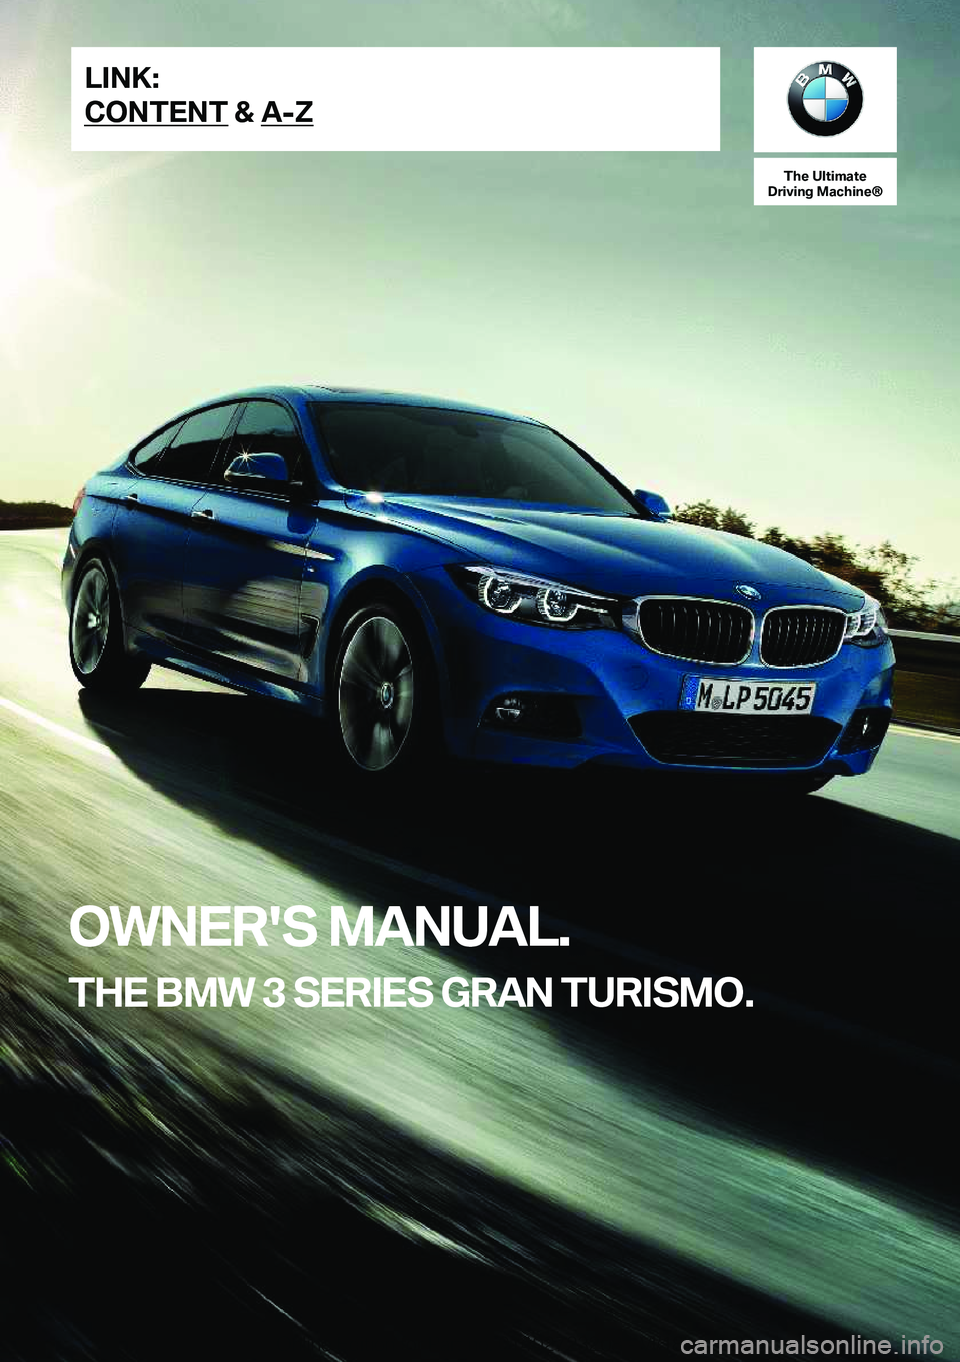 BMW 3 SERIES GRAN TURISMO 2019  Owners Manual �T�h�e��U�l�t�i�m�a�t�e
�D�r�i�v�i�n�g��M�a�c�h�i�n�e�n
�O�W�N�E�R�'�S��M�A�N�U�A�L�.
�T�H�E��B�M�W��3��S�E�R�I�E�S��G�R�A�N��T�U�R�I�S�M�O�.�L�I�N�K�:
�C�O�N�T�E�N�T��&��A�-�Z�O�n�l�i�n